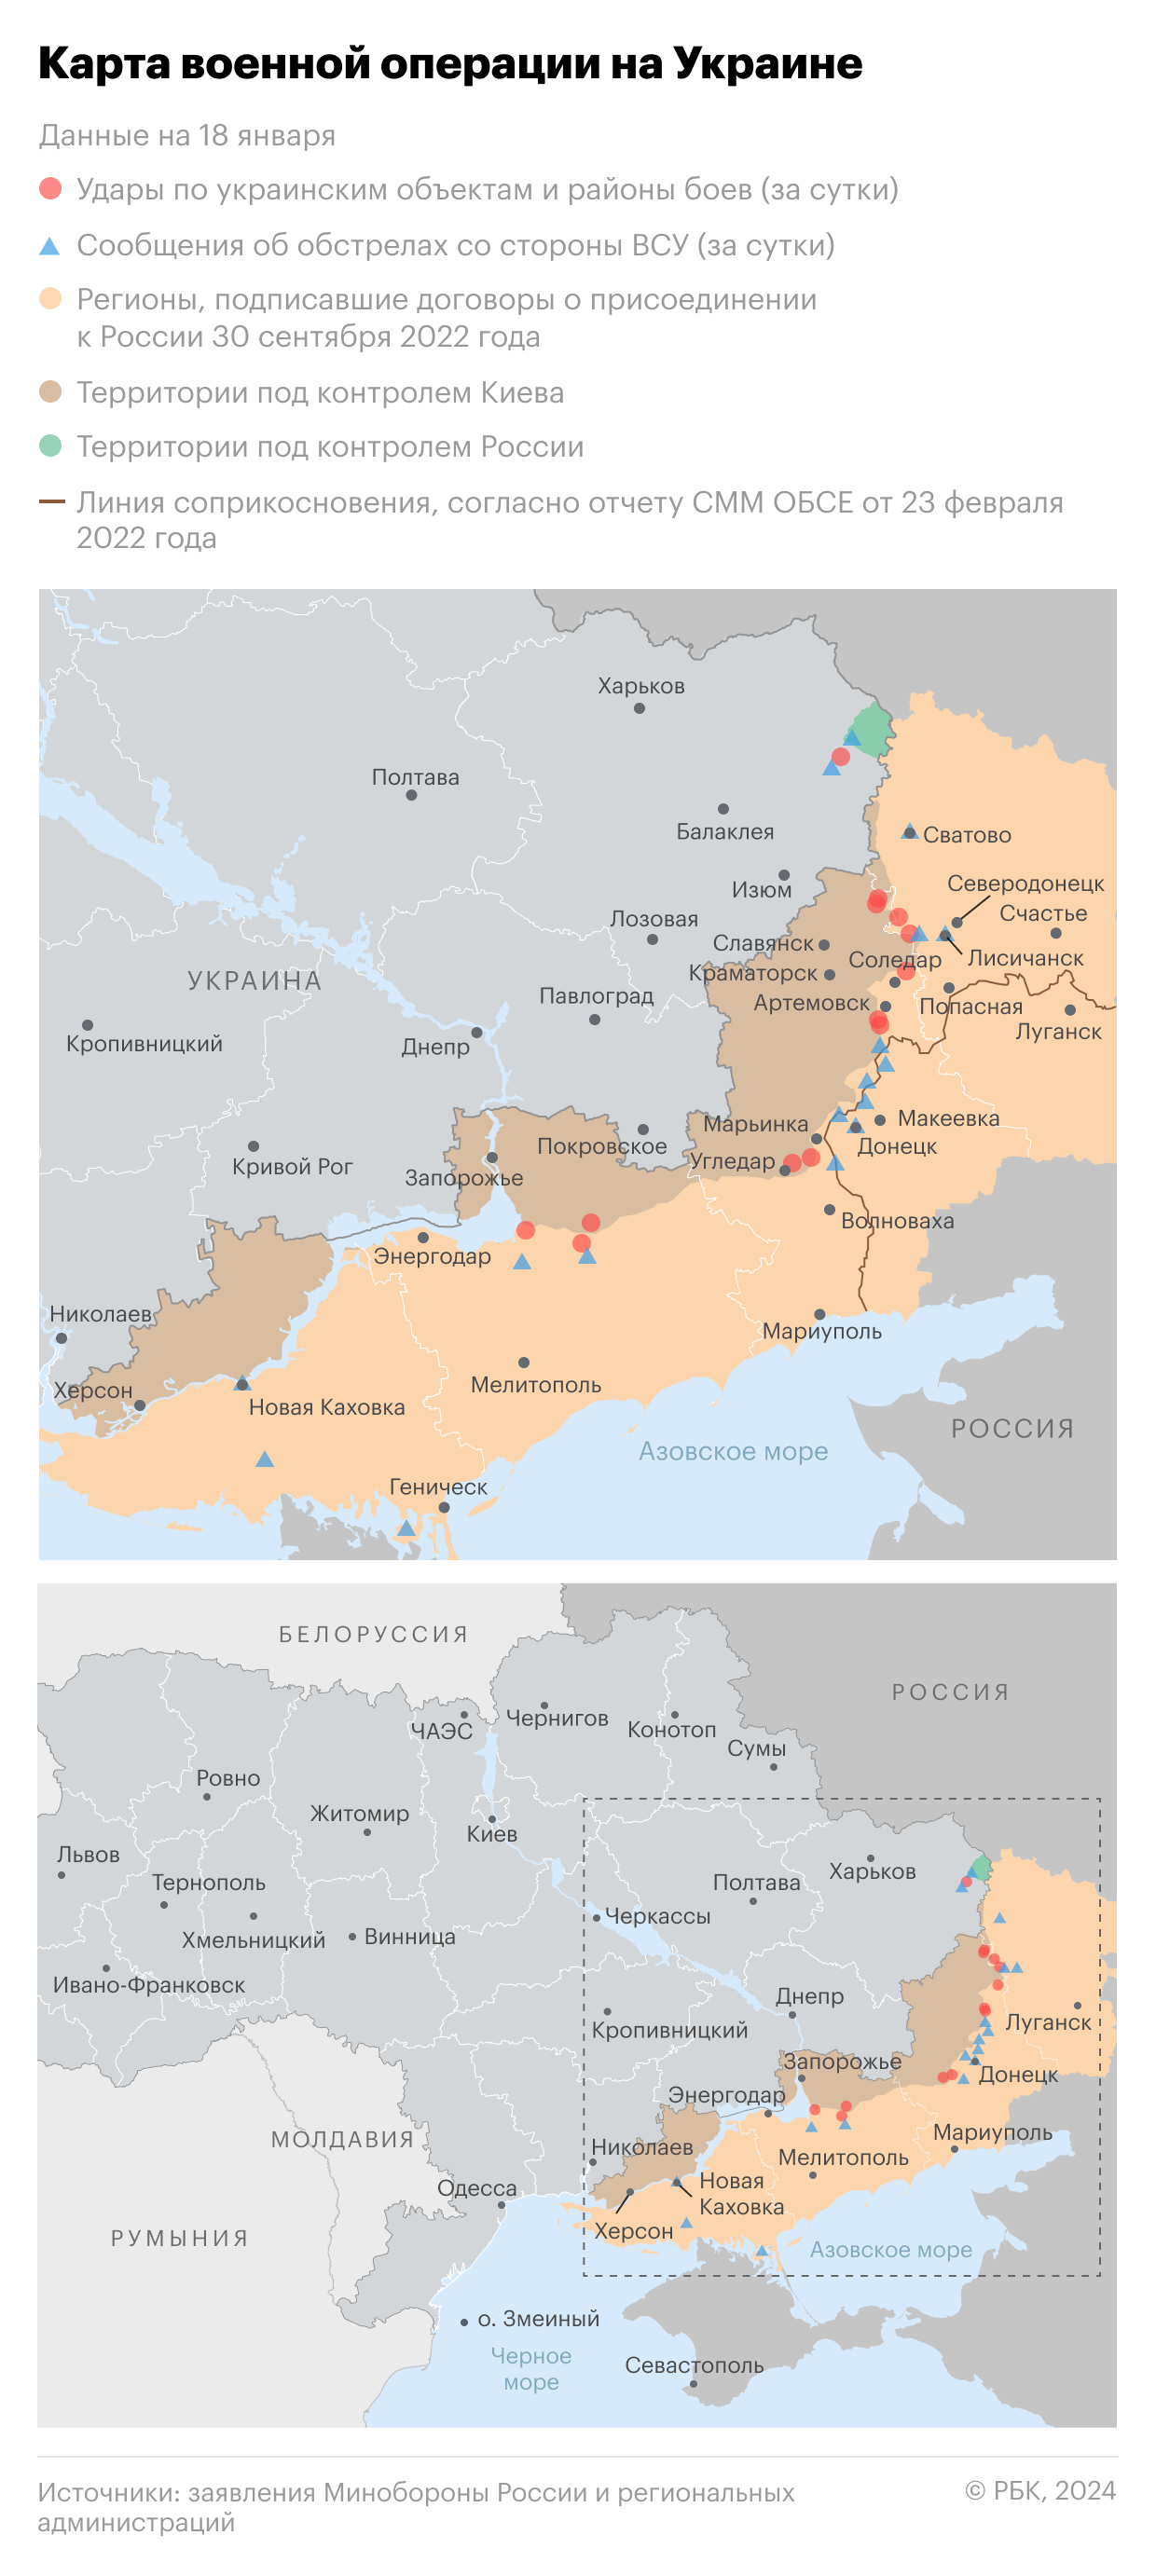 Военная операция на Украине. Карта на 18 января